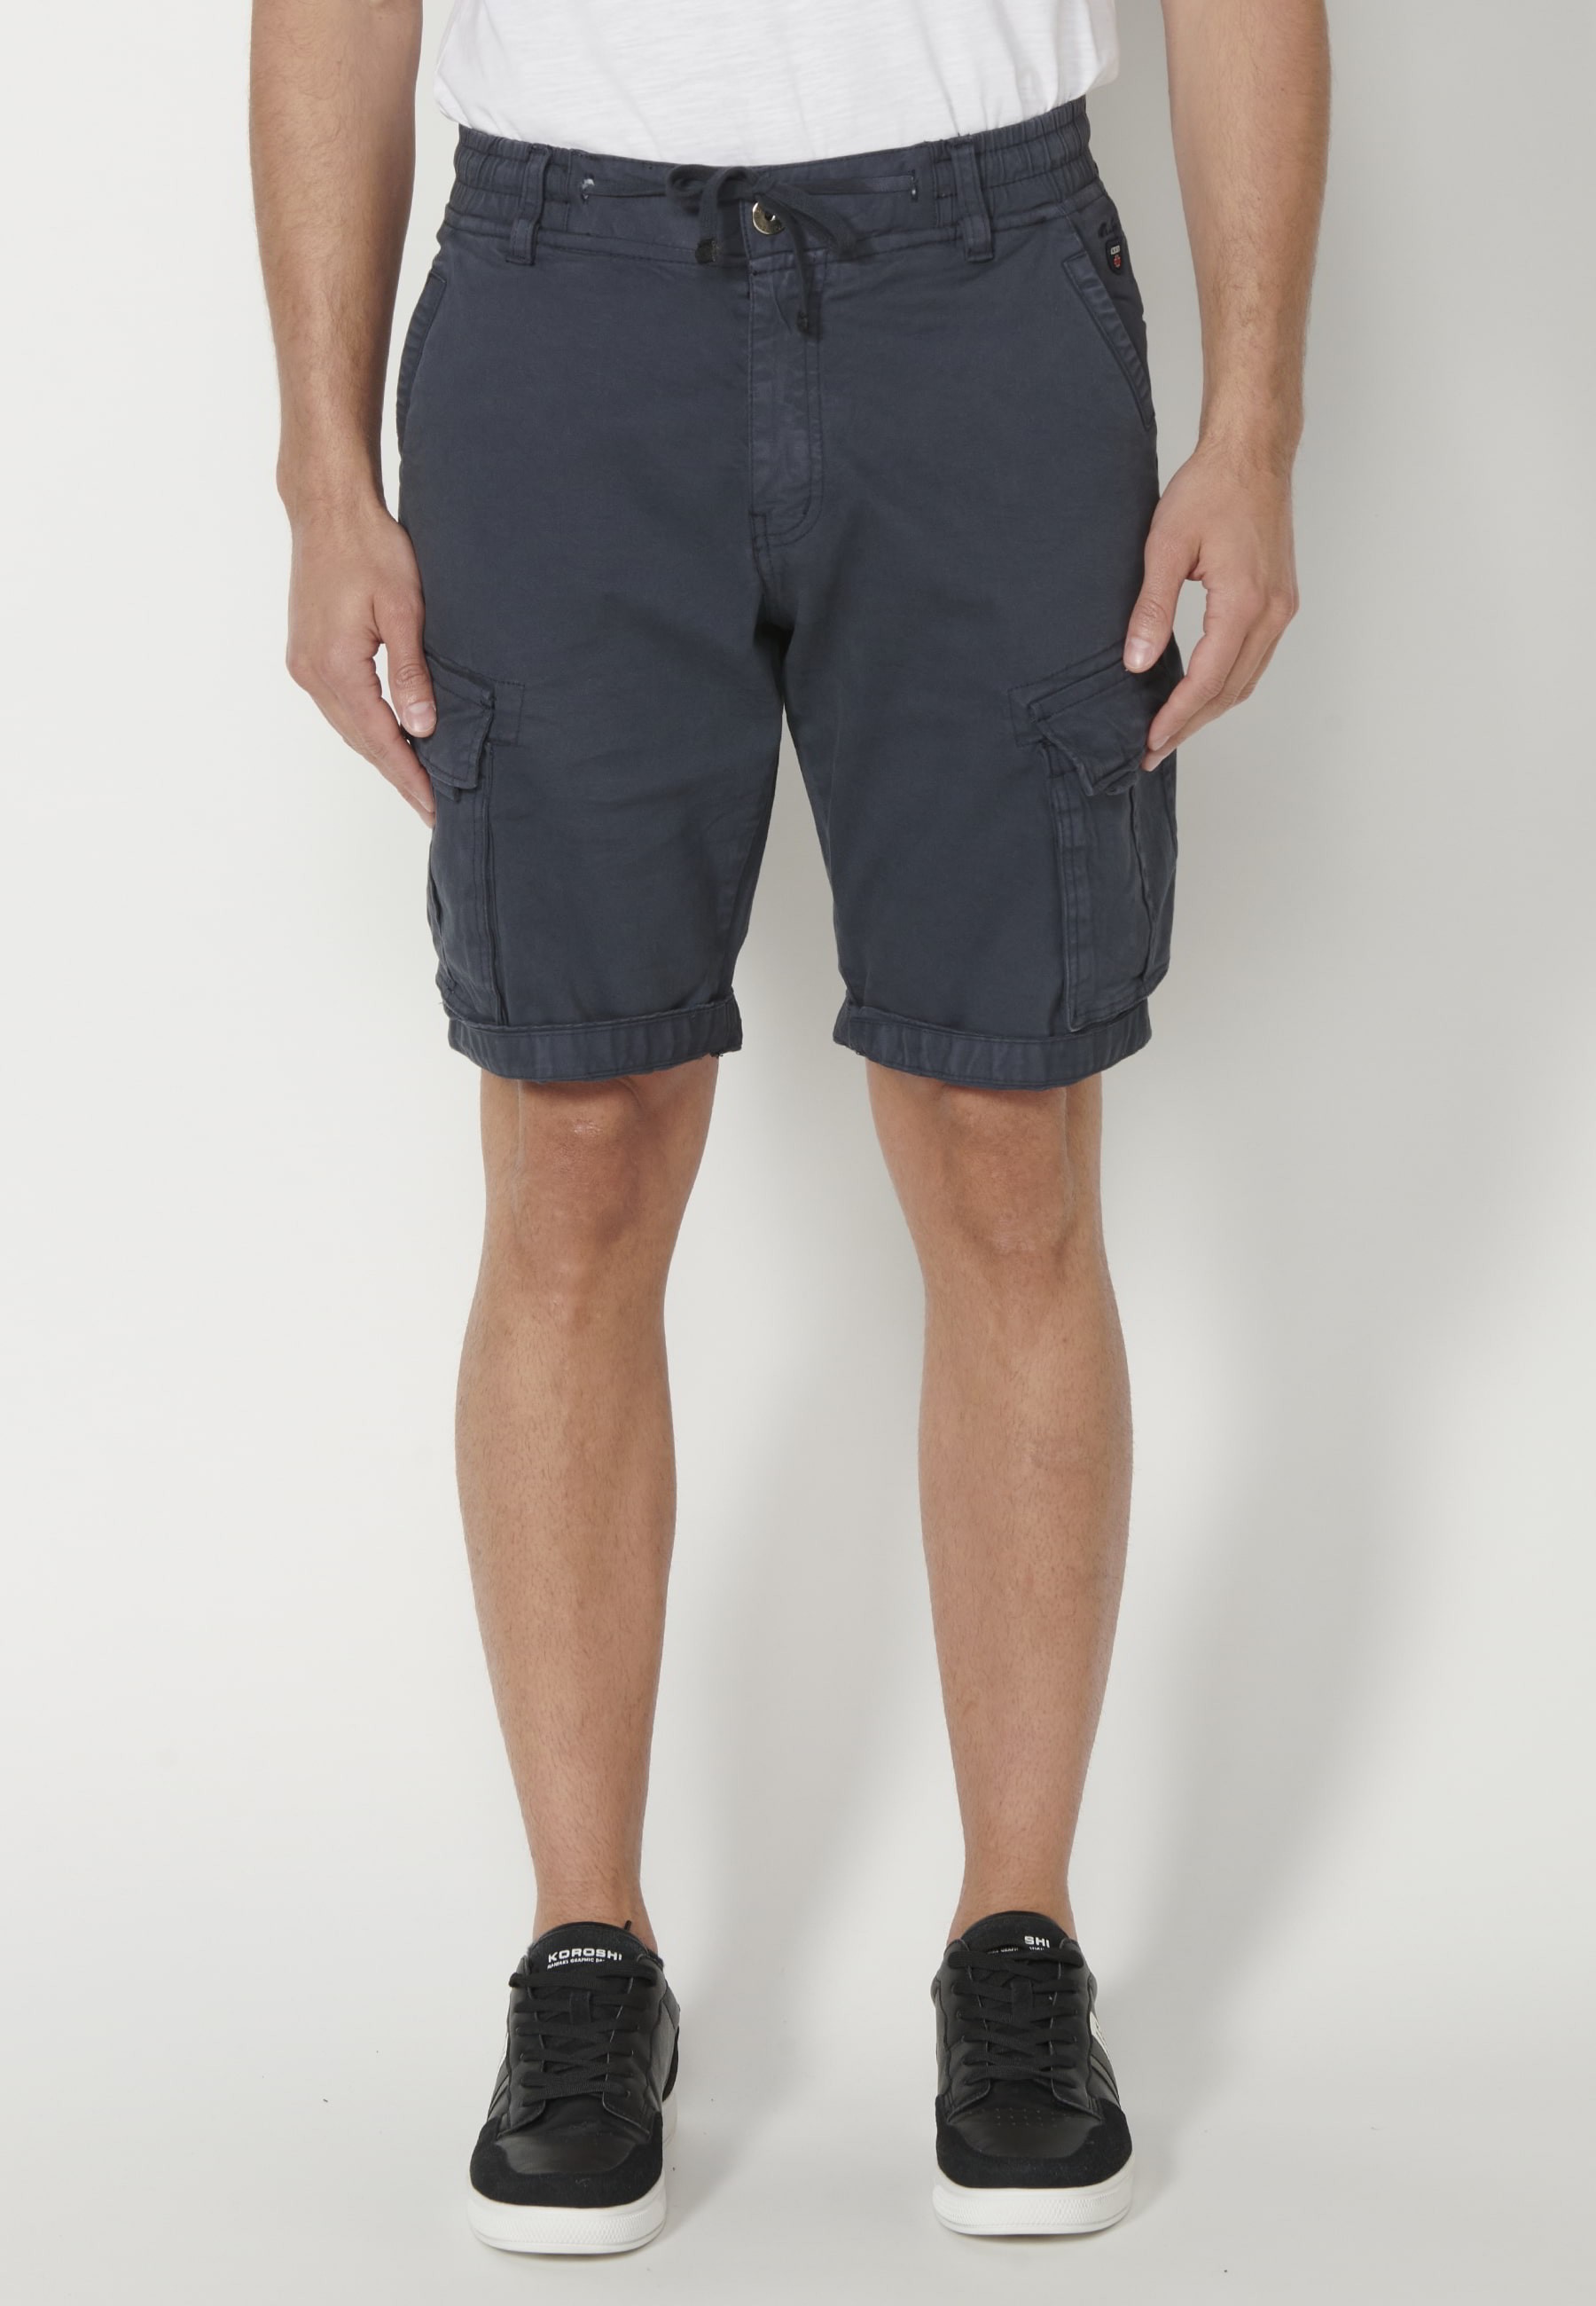 Bermuda cargo shorts in Navy color for Men